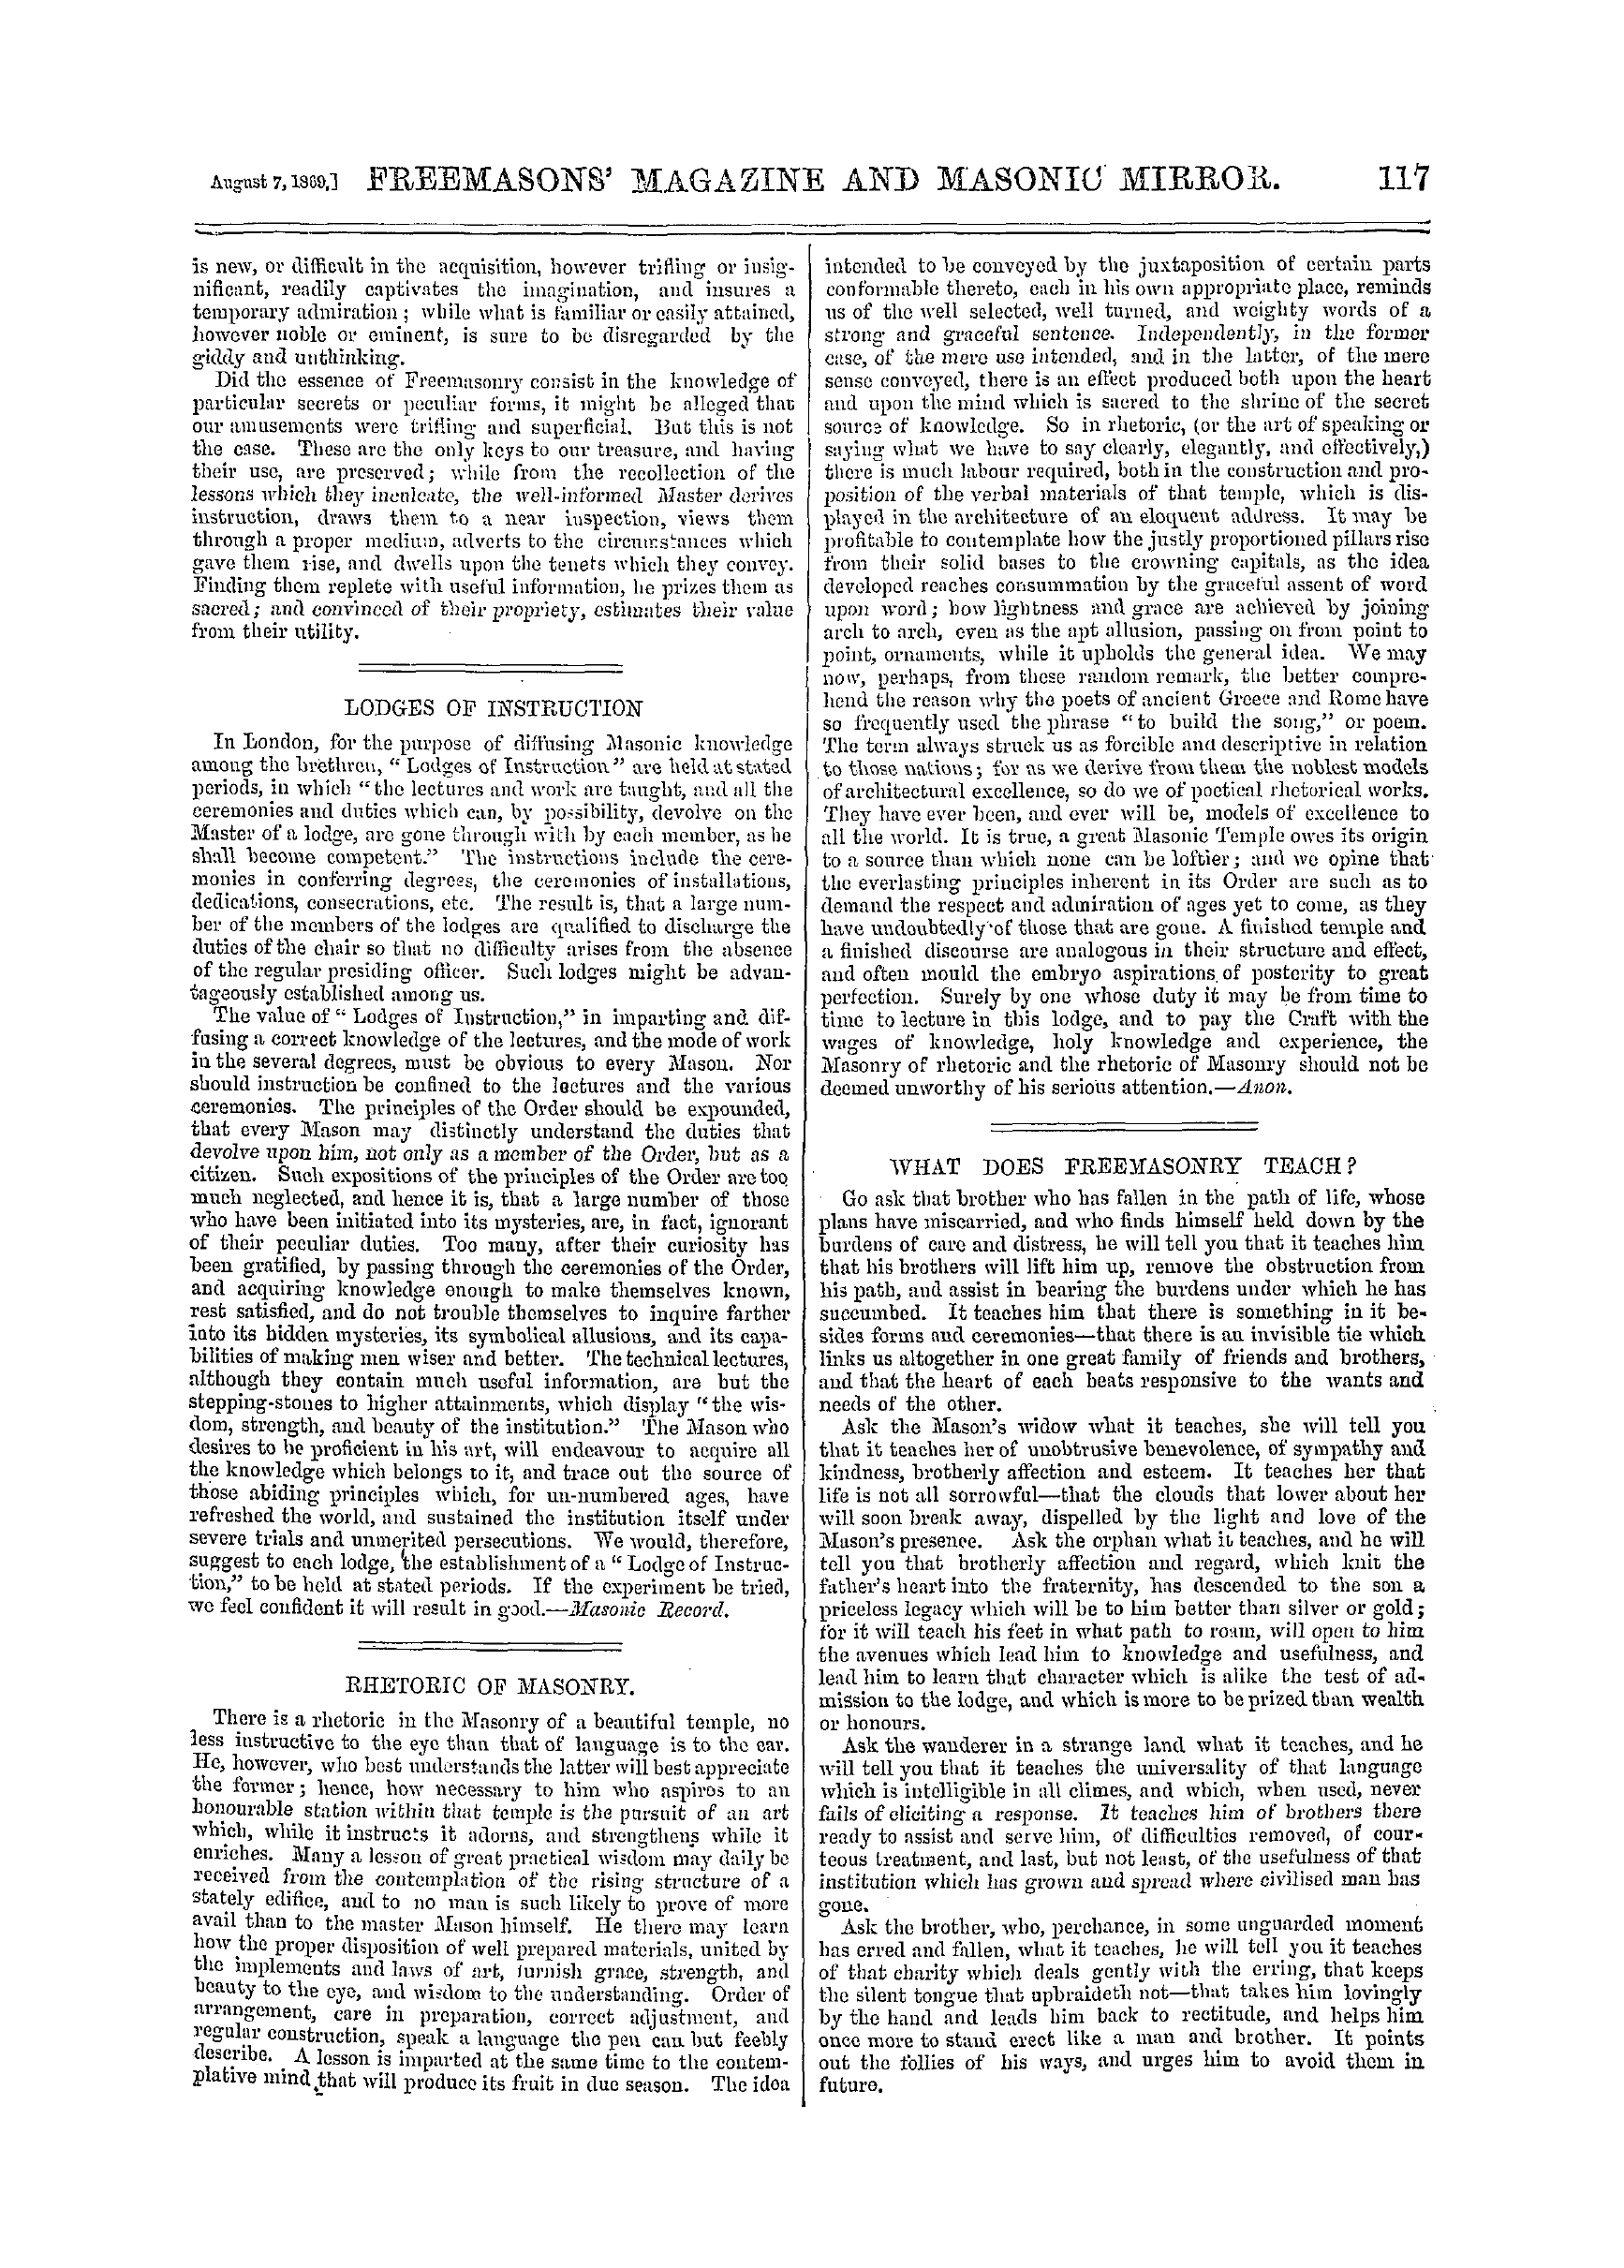 The Freemasons' Monthly Magazine: 1869-08-07 - What Does Freemasonry Teach?